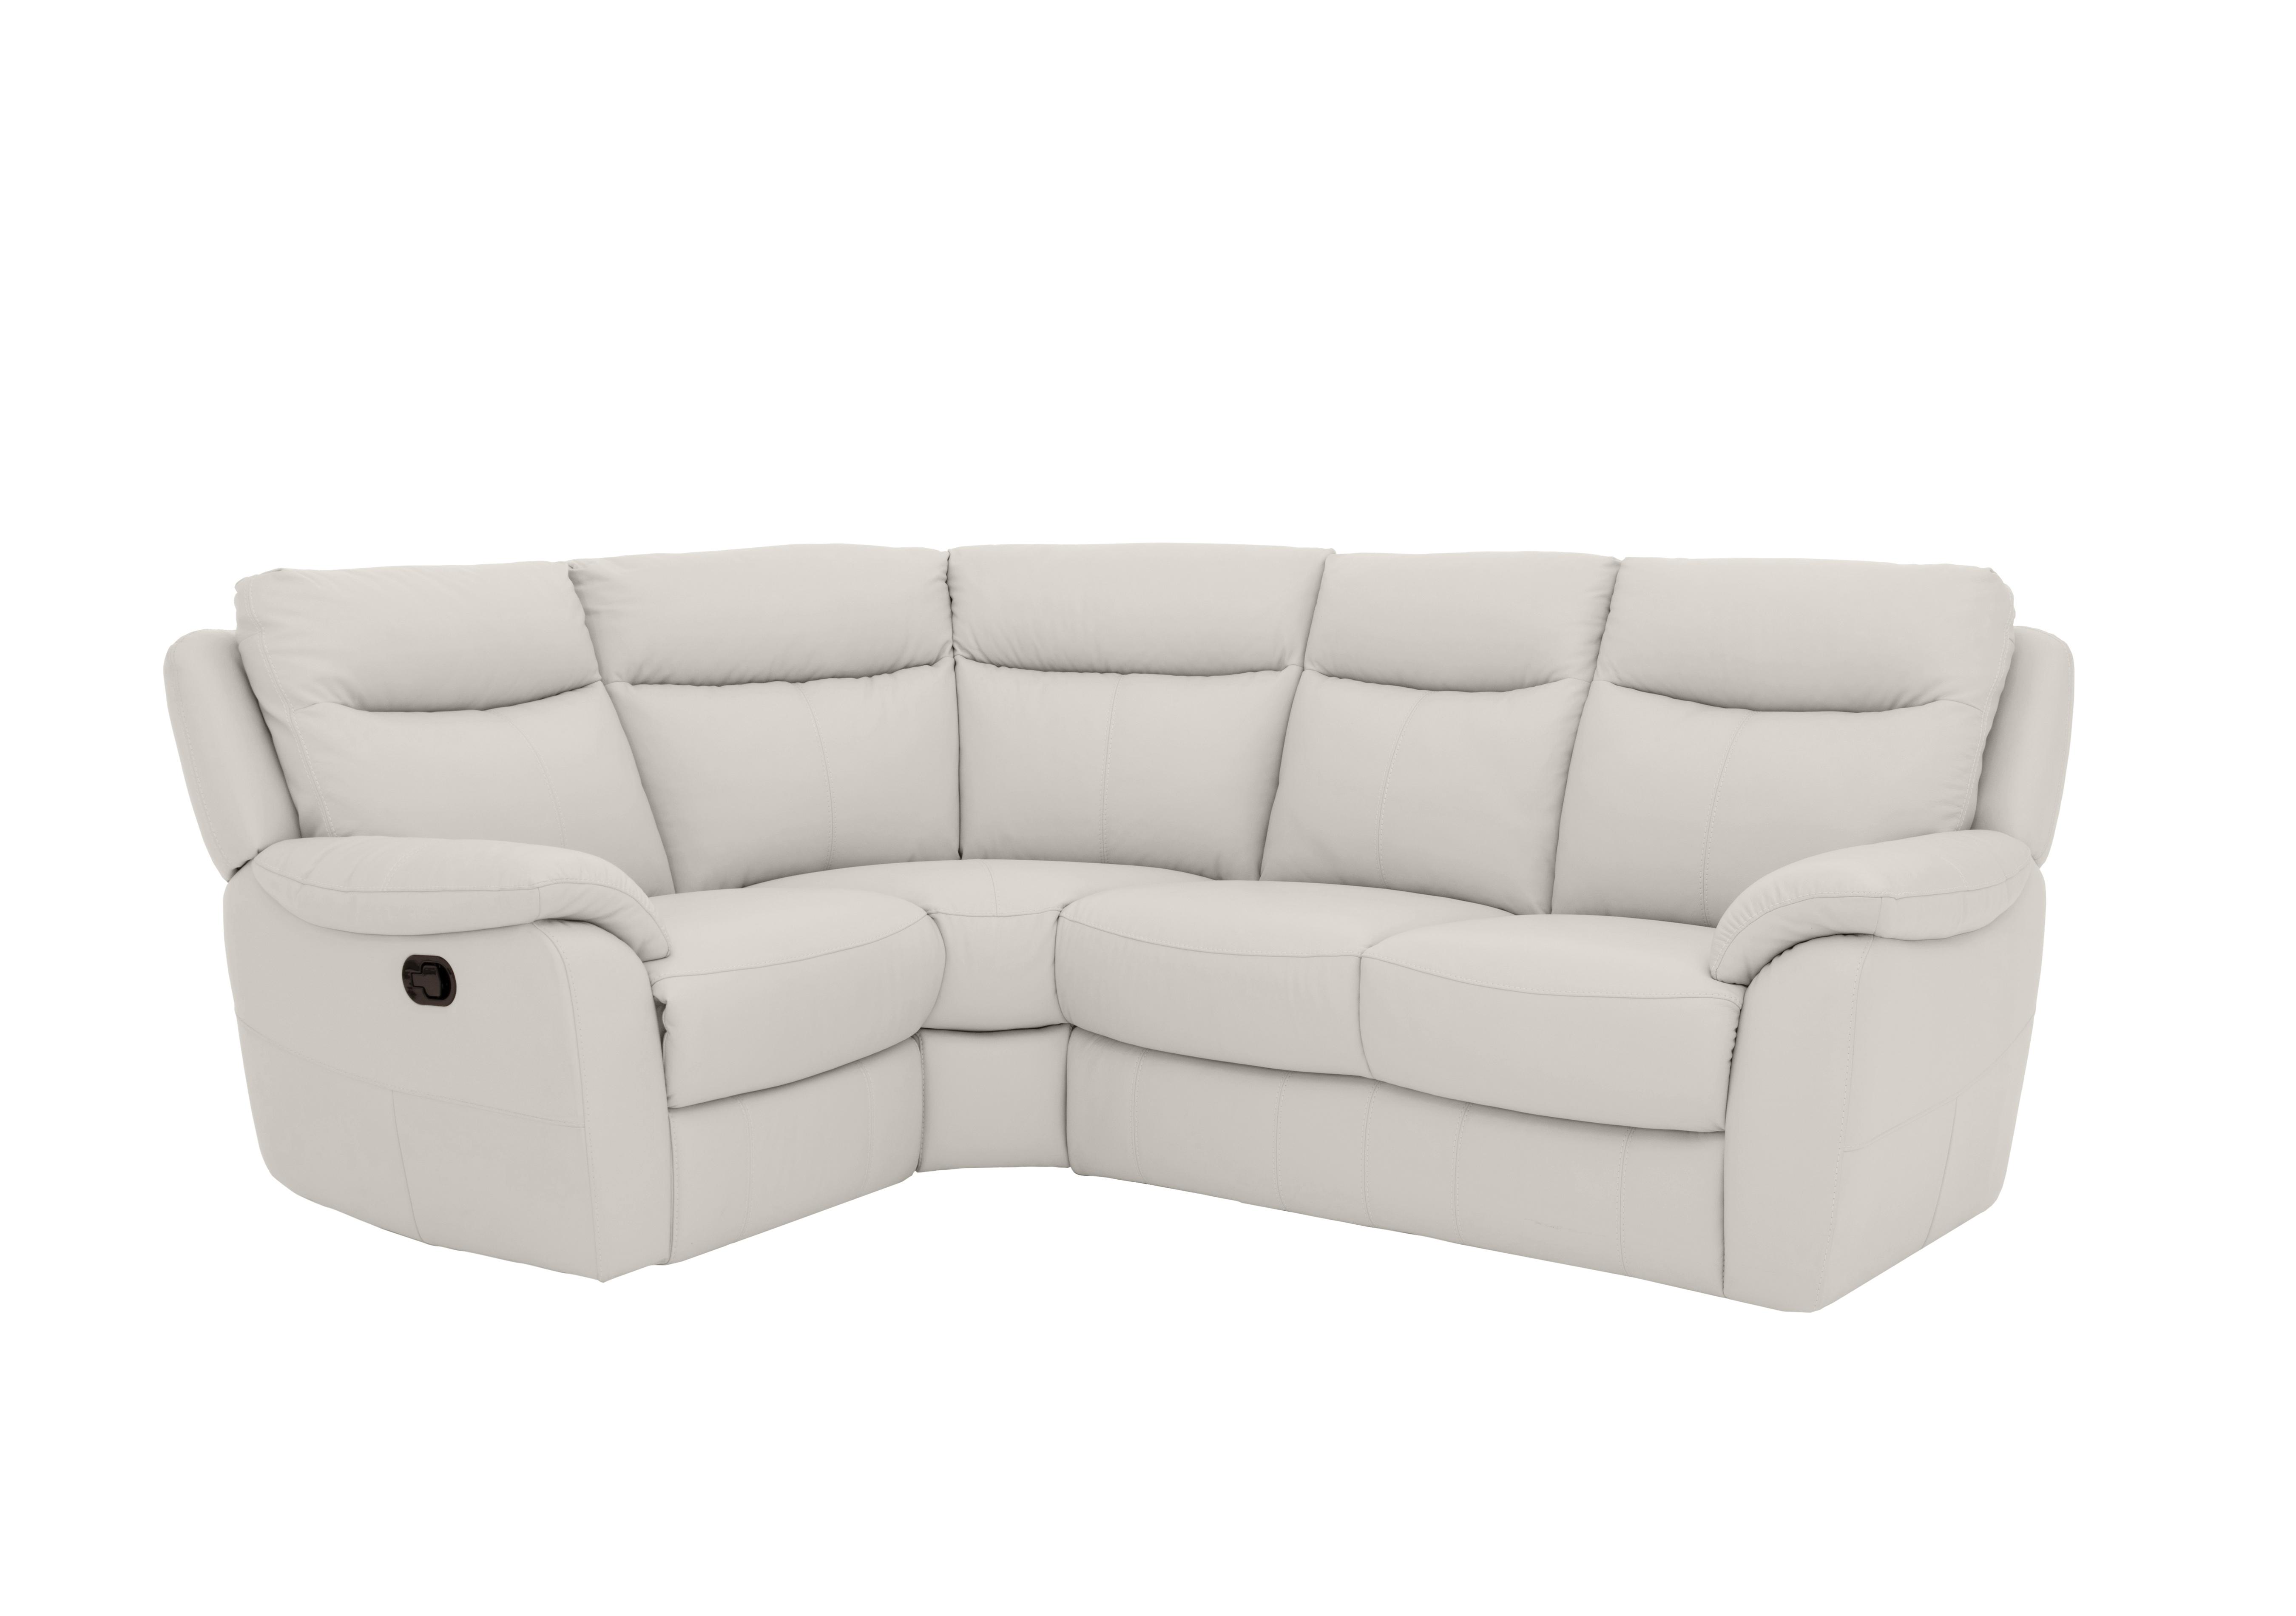 Snug Compact Leather Corner Sofa in Bv-156e Frost on Furniture Village